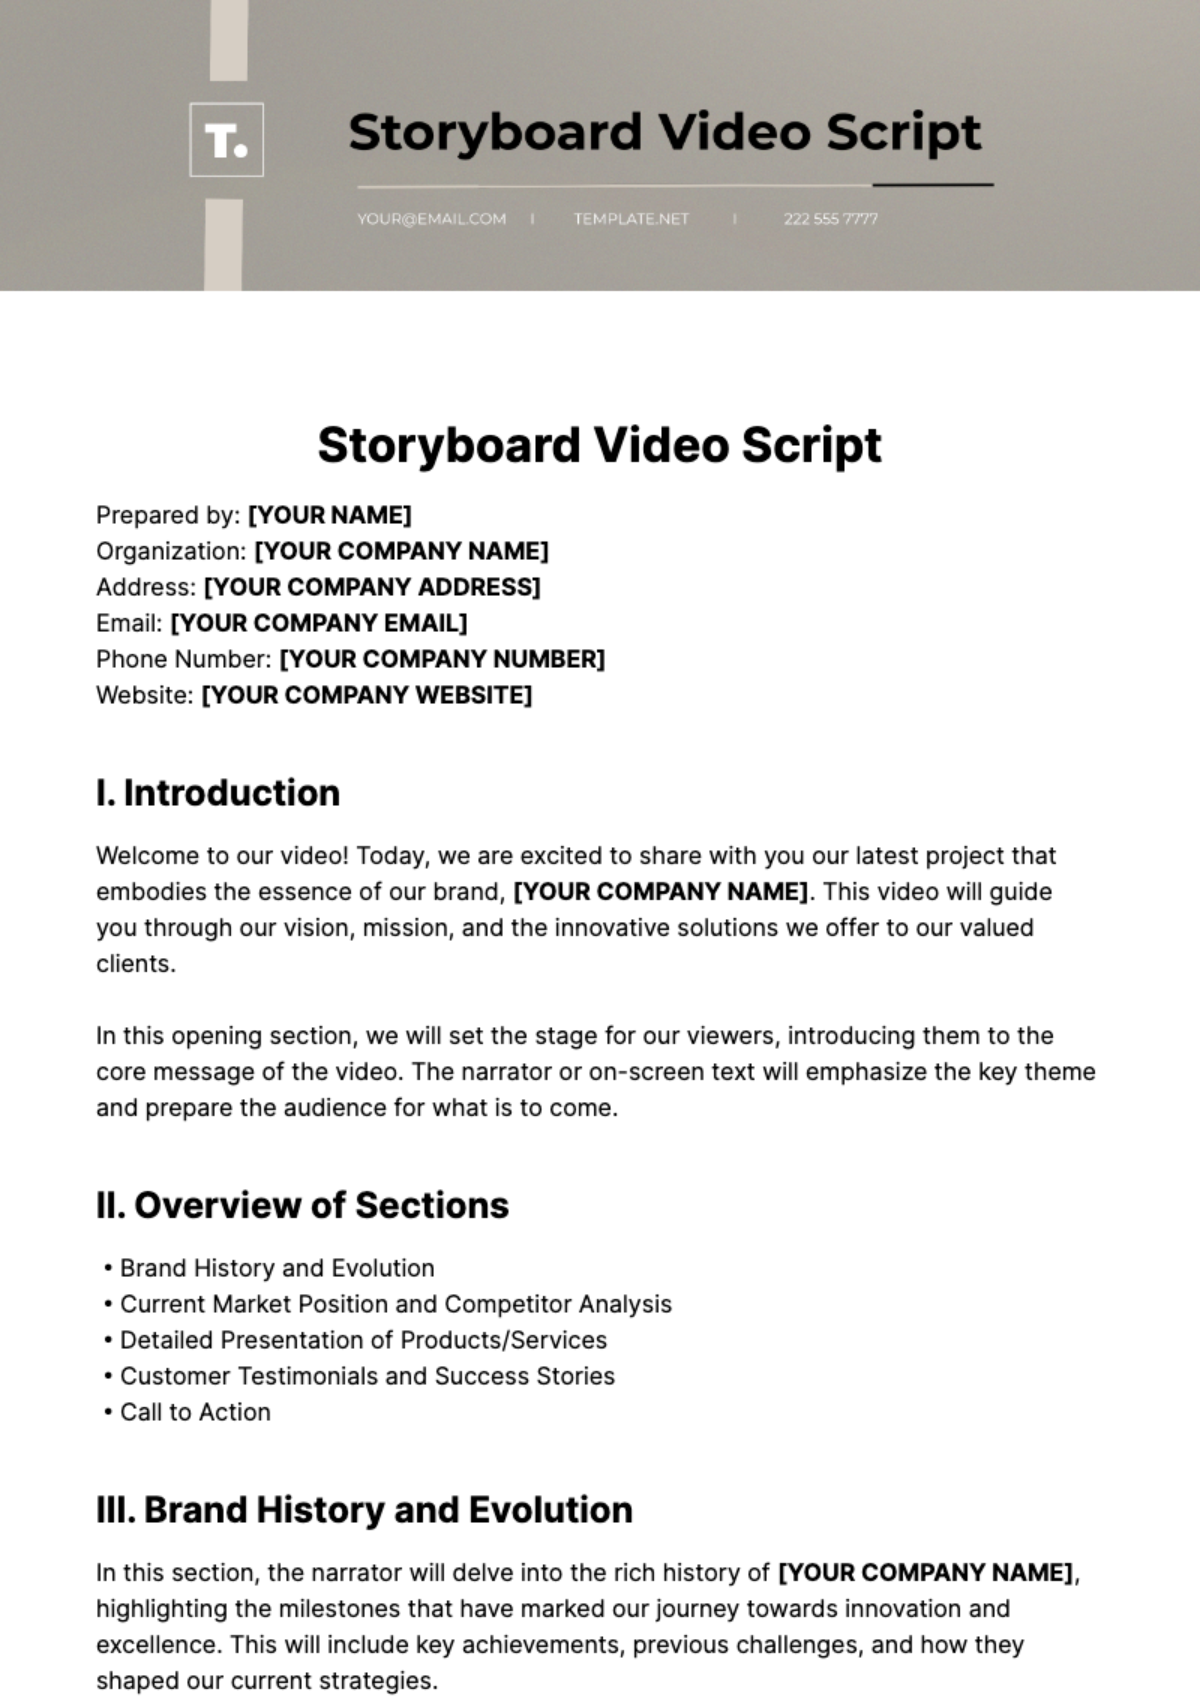 Storyboard Video Script Template